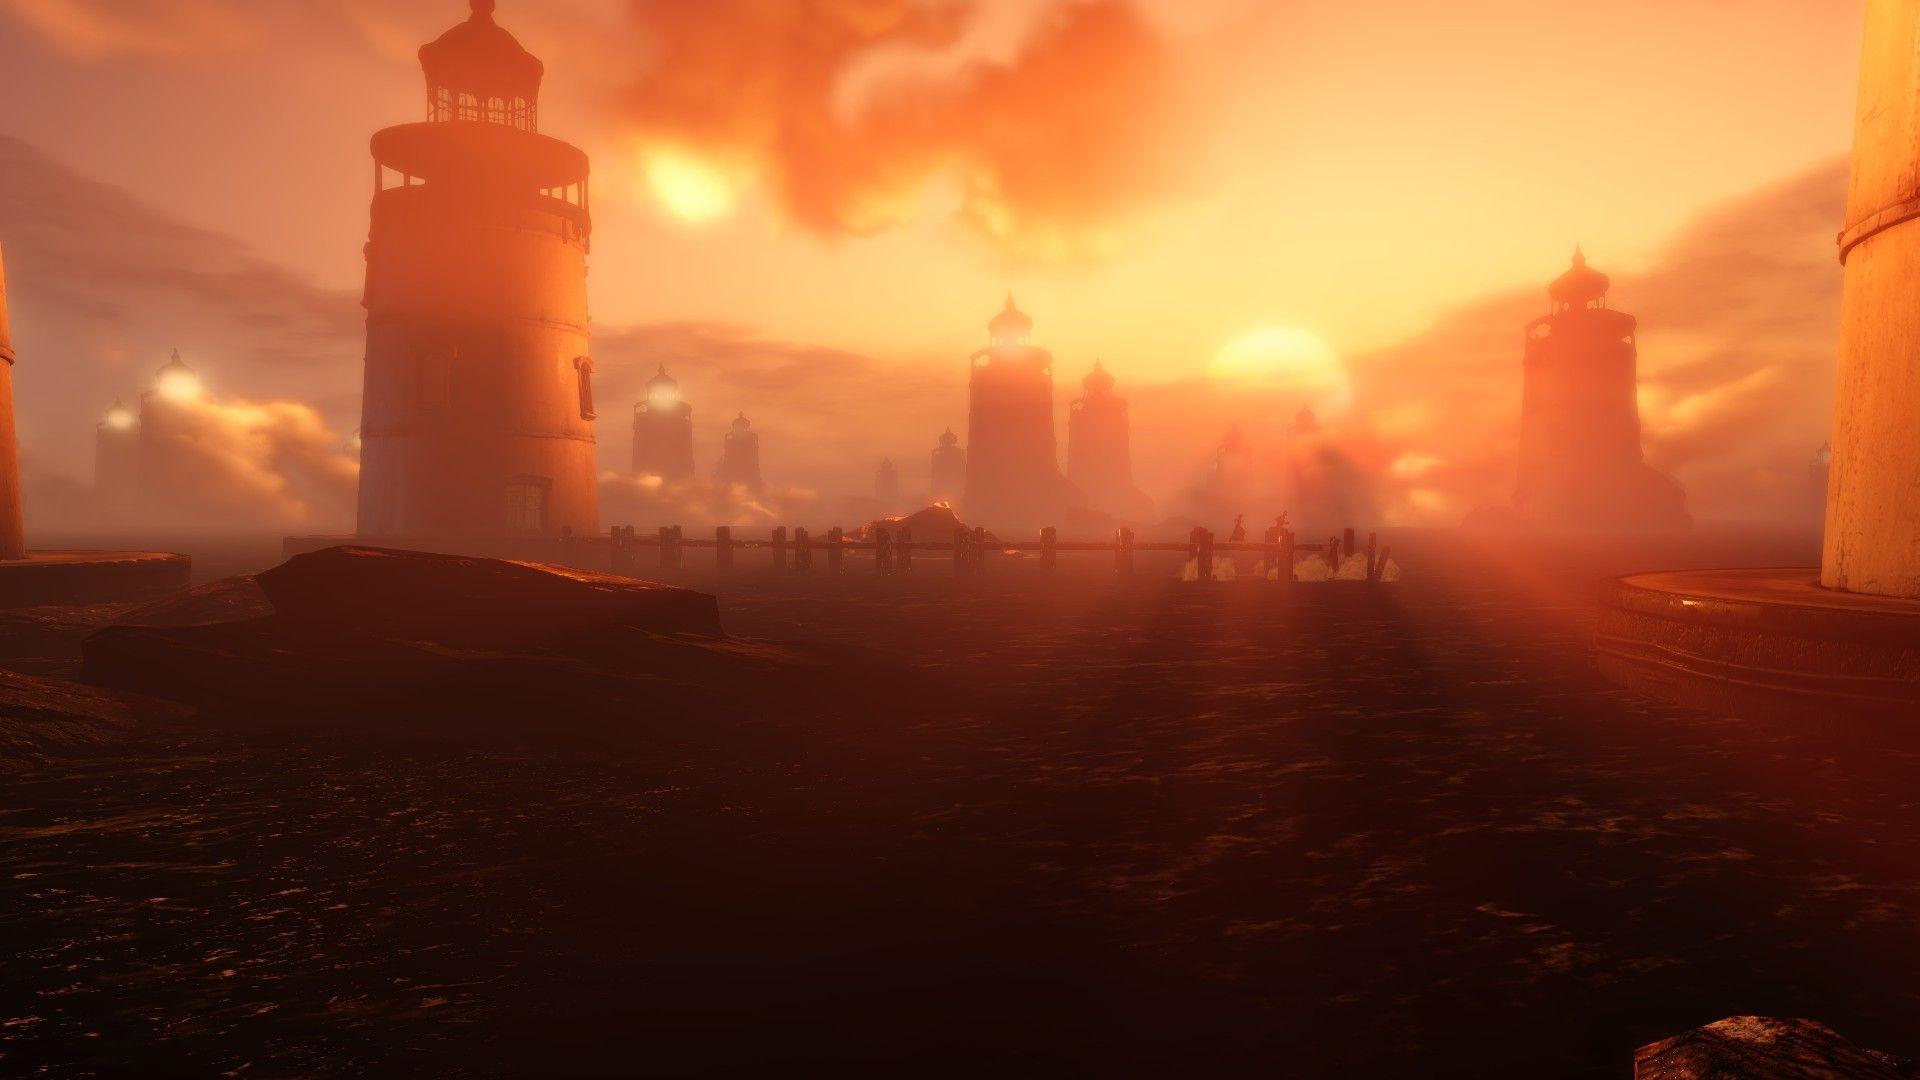 Bioshock Infinite screenshot I took, looks pretty good as a